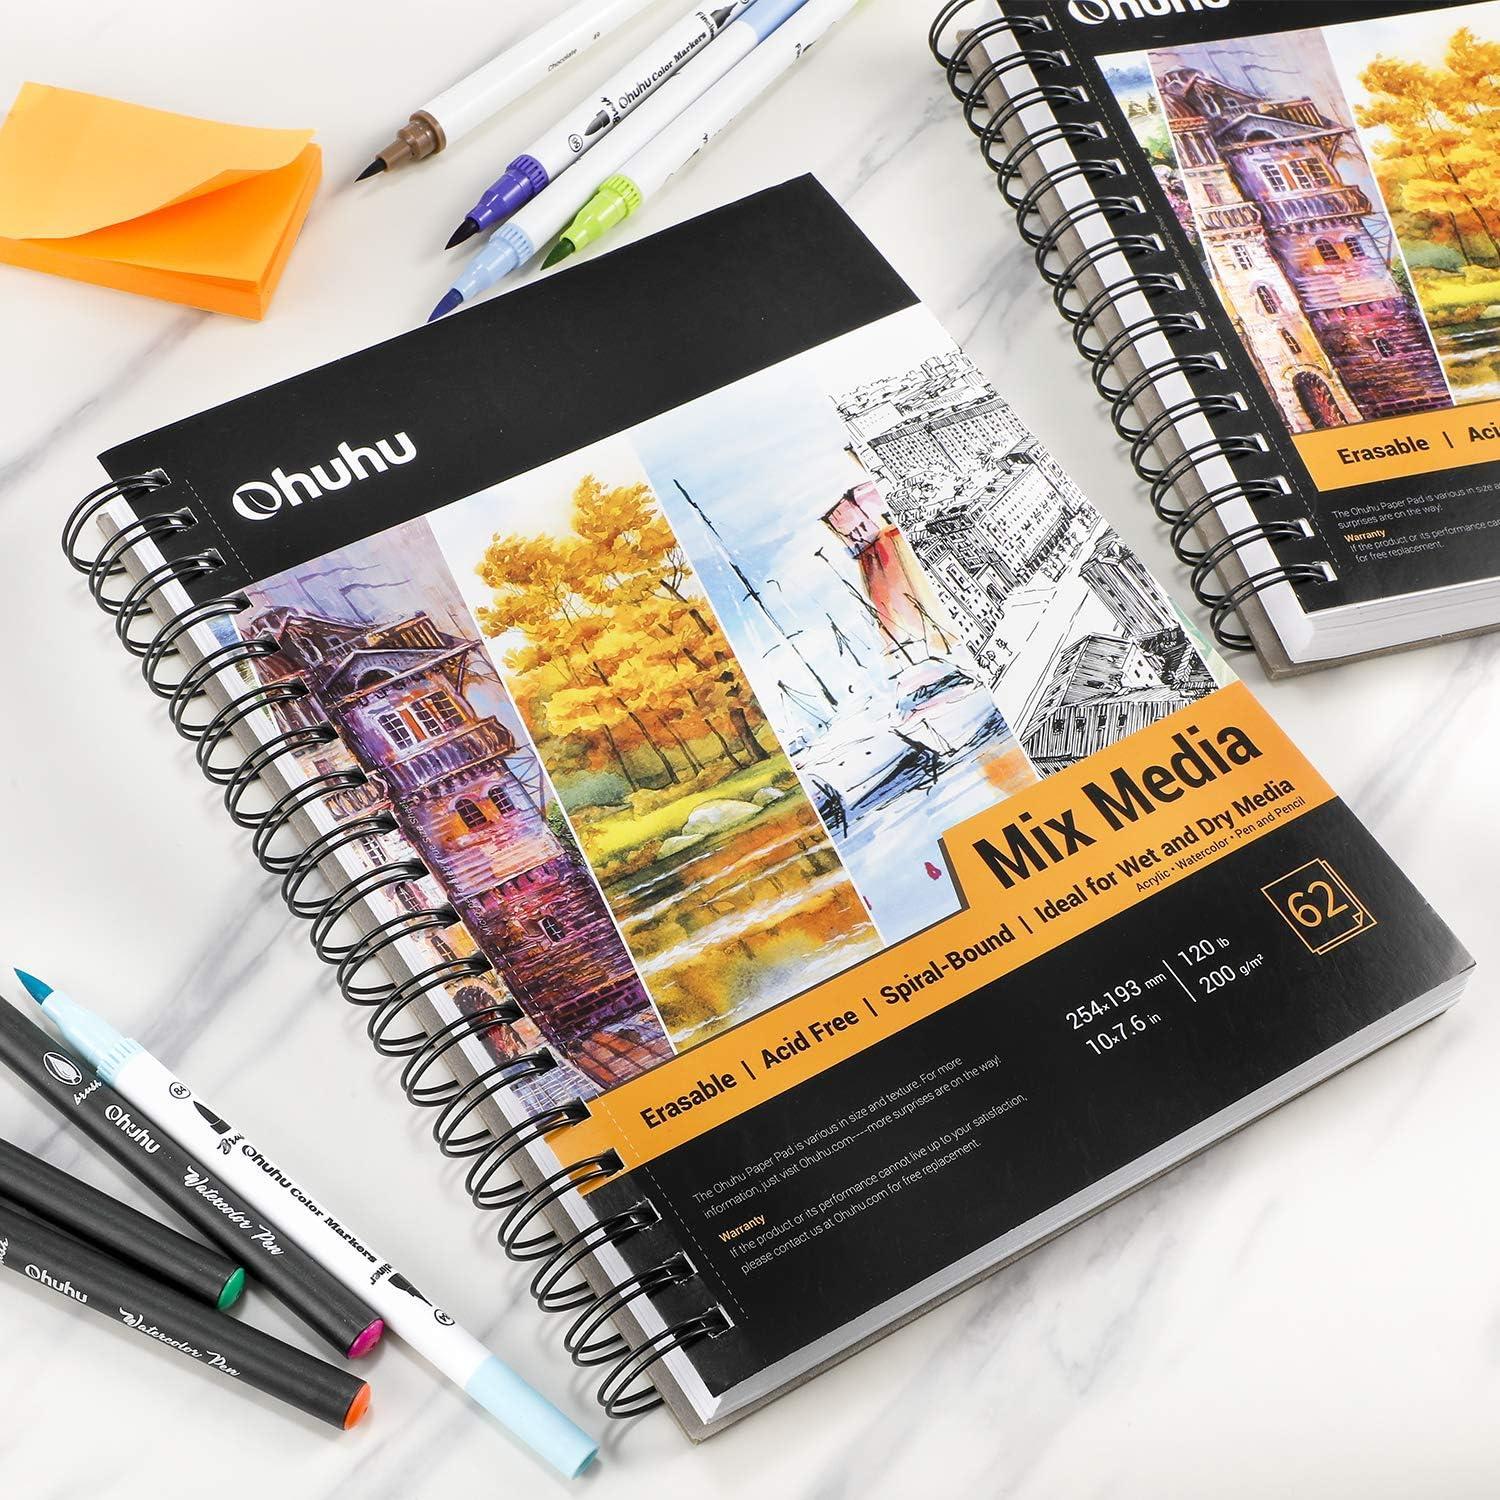 Ohuhu Marker Pad Sketchbook for Markers Hardcover